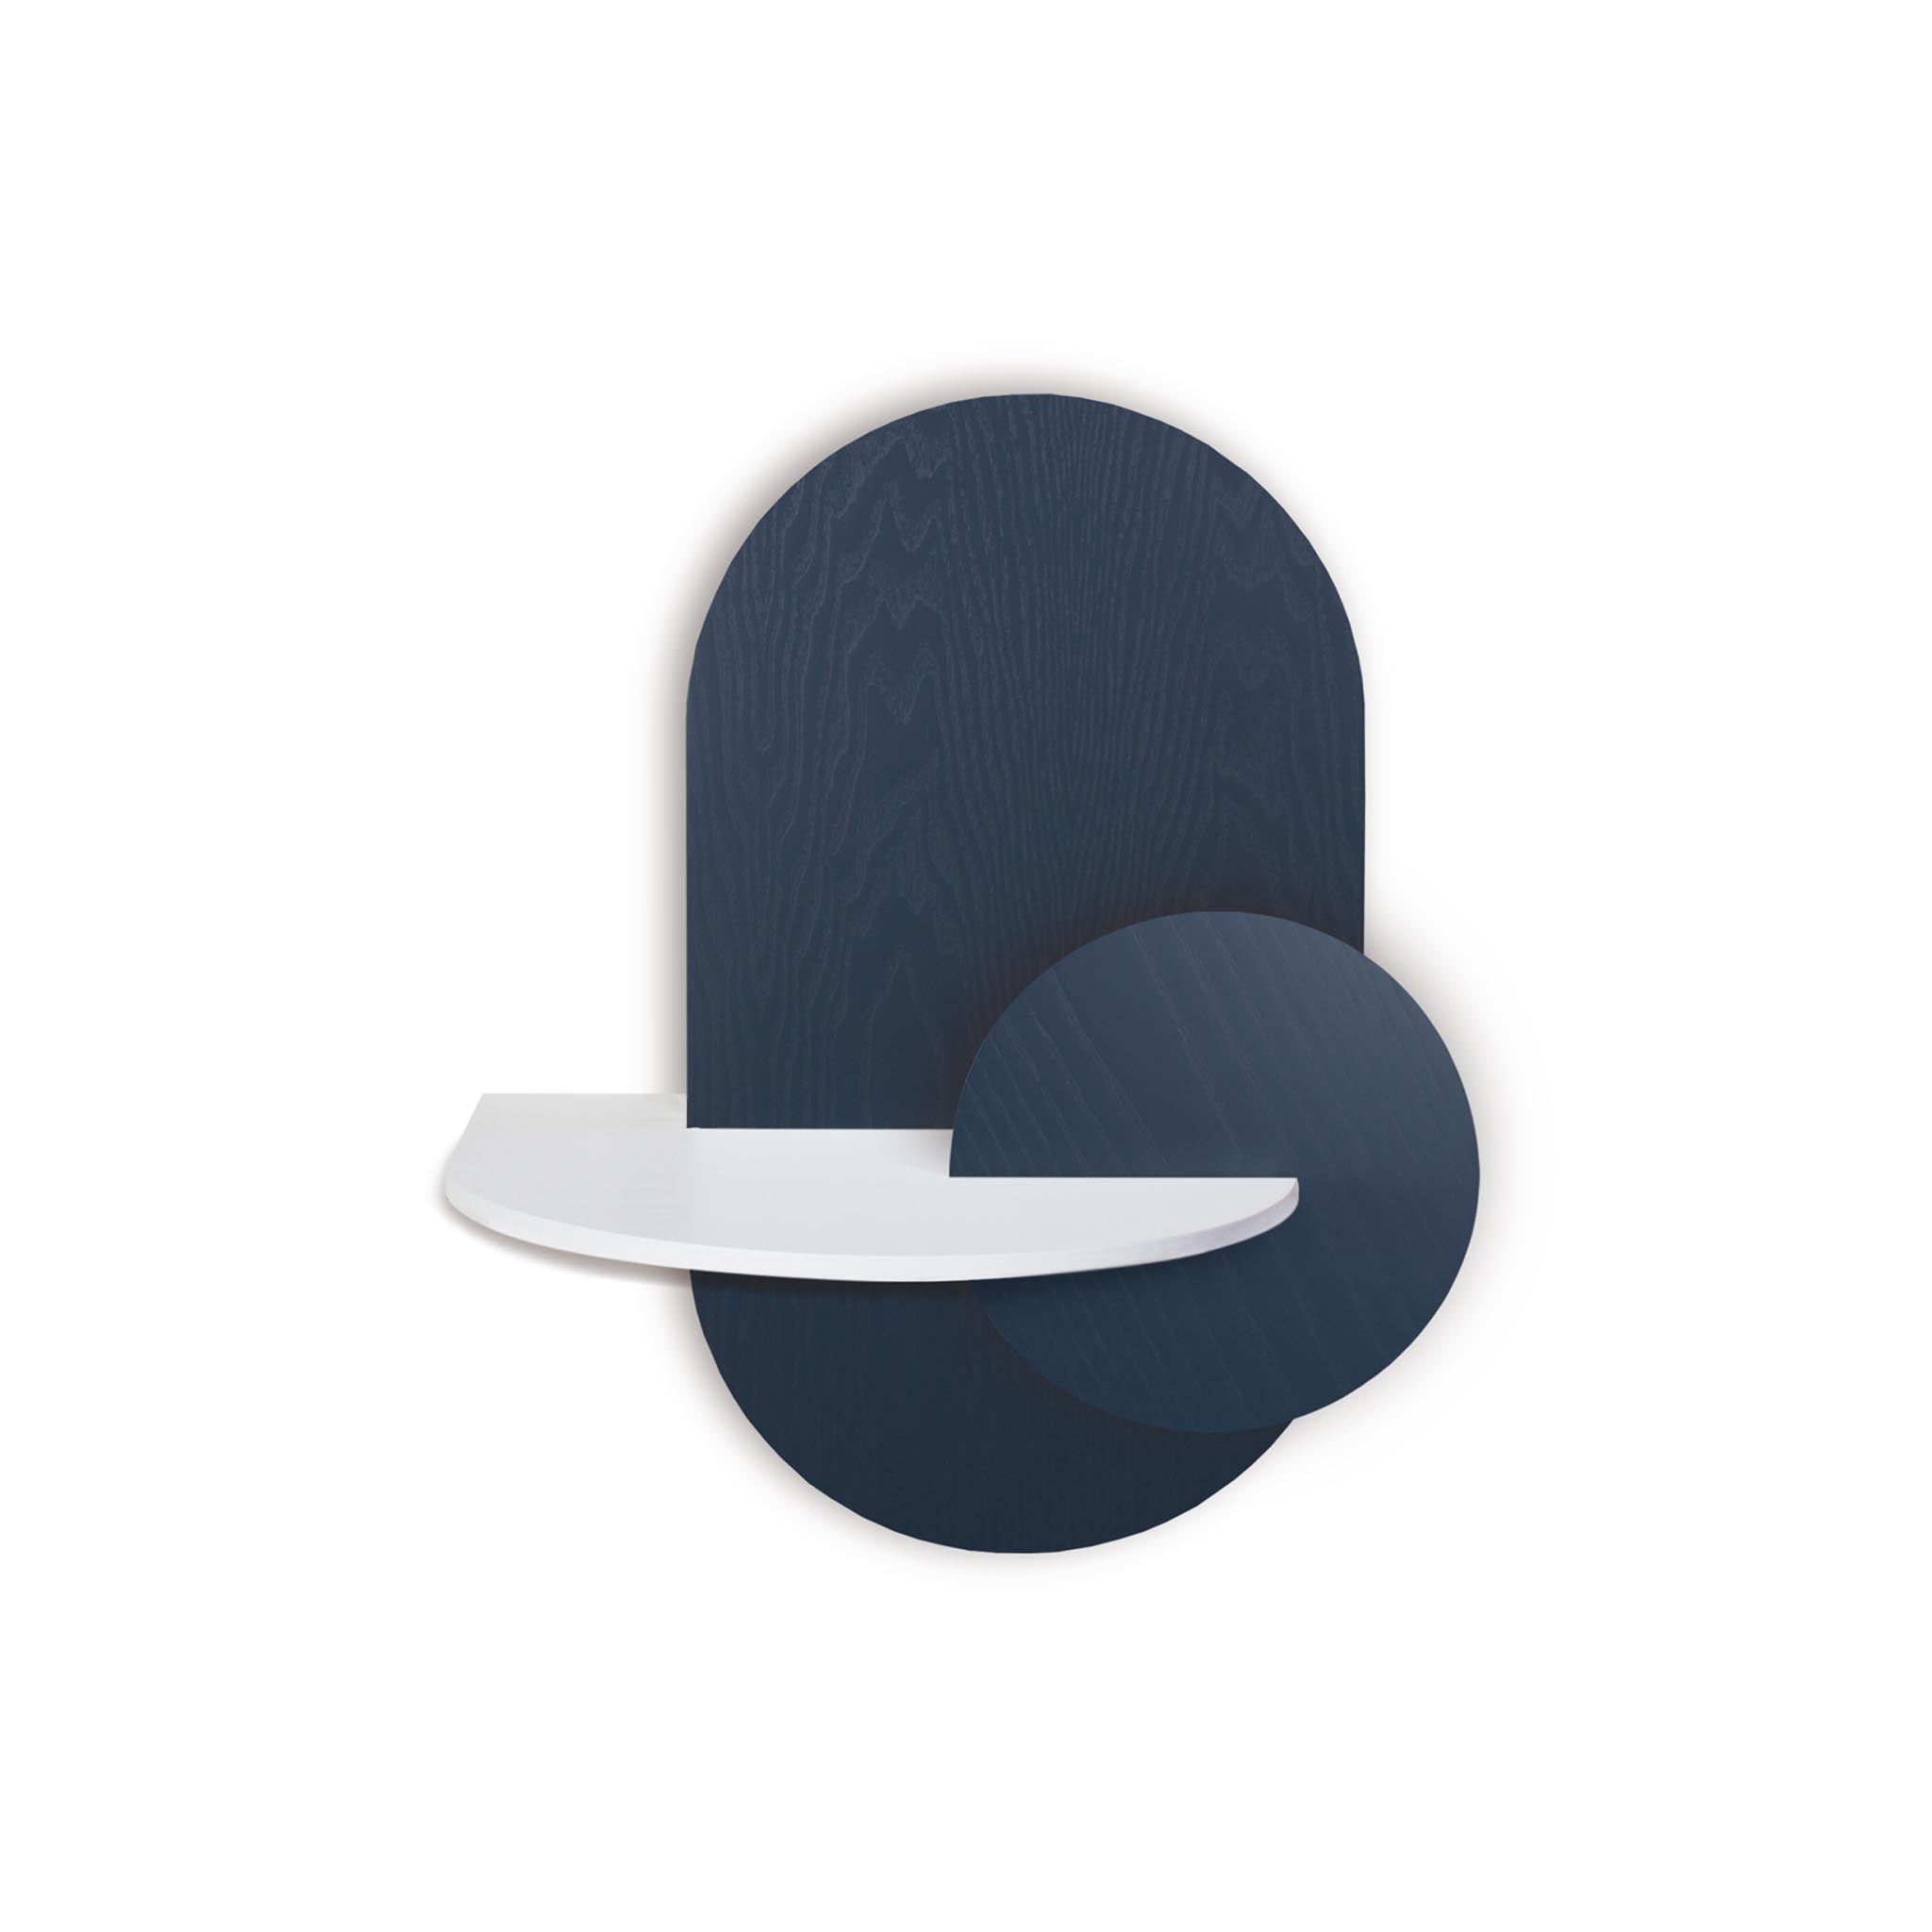 Alba floating nightstand · Blue oval